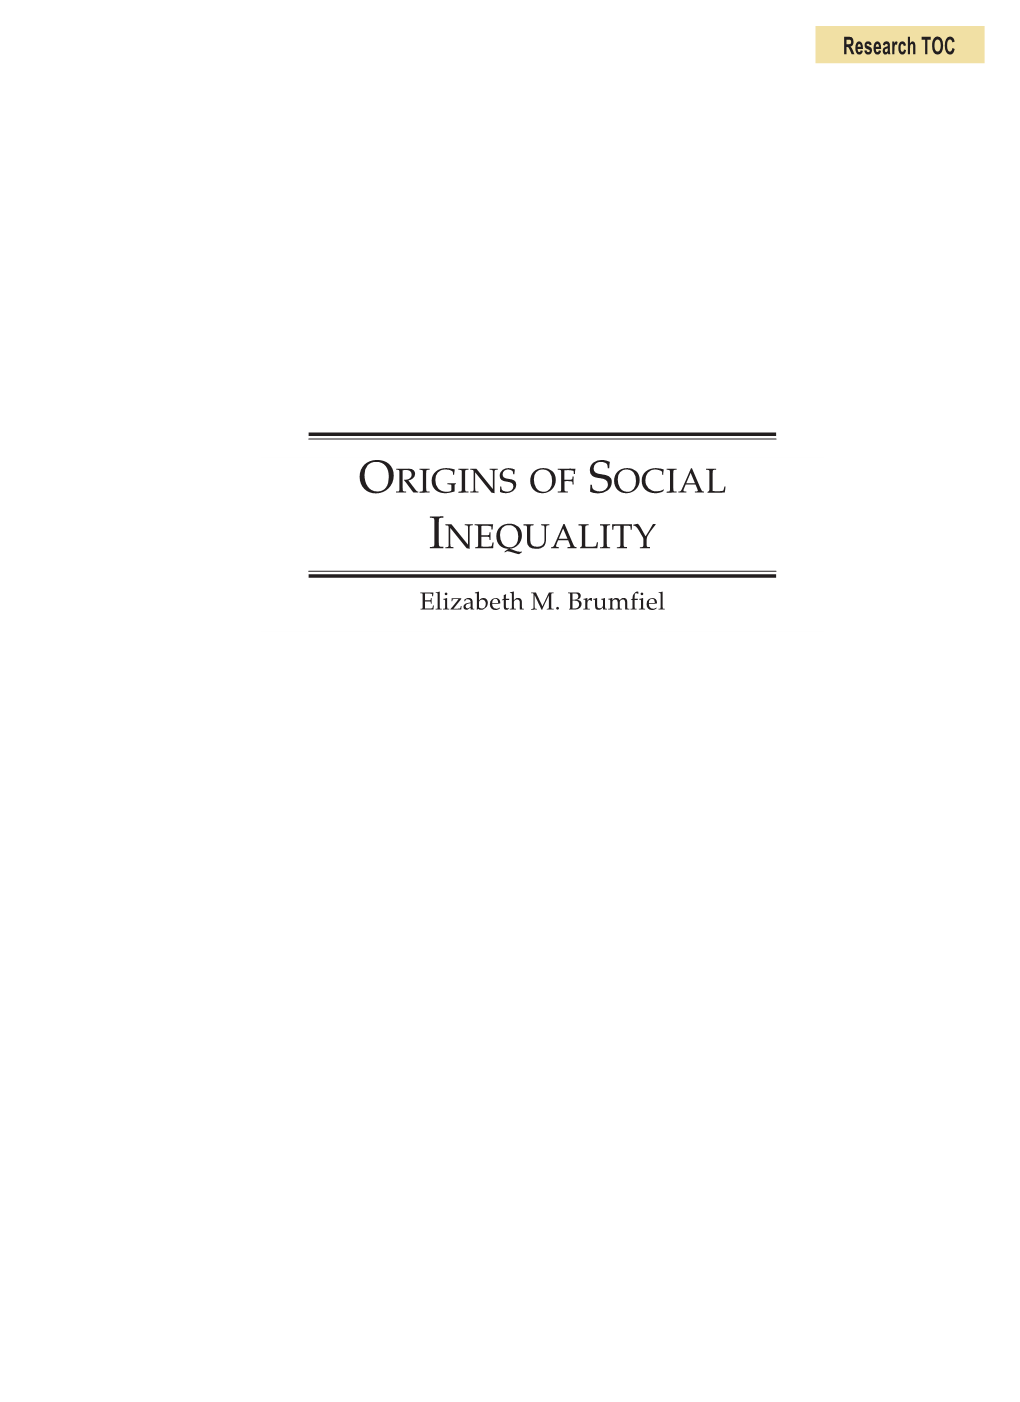 Origins of Social Inequality